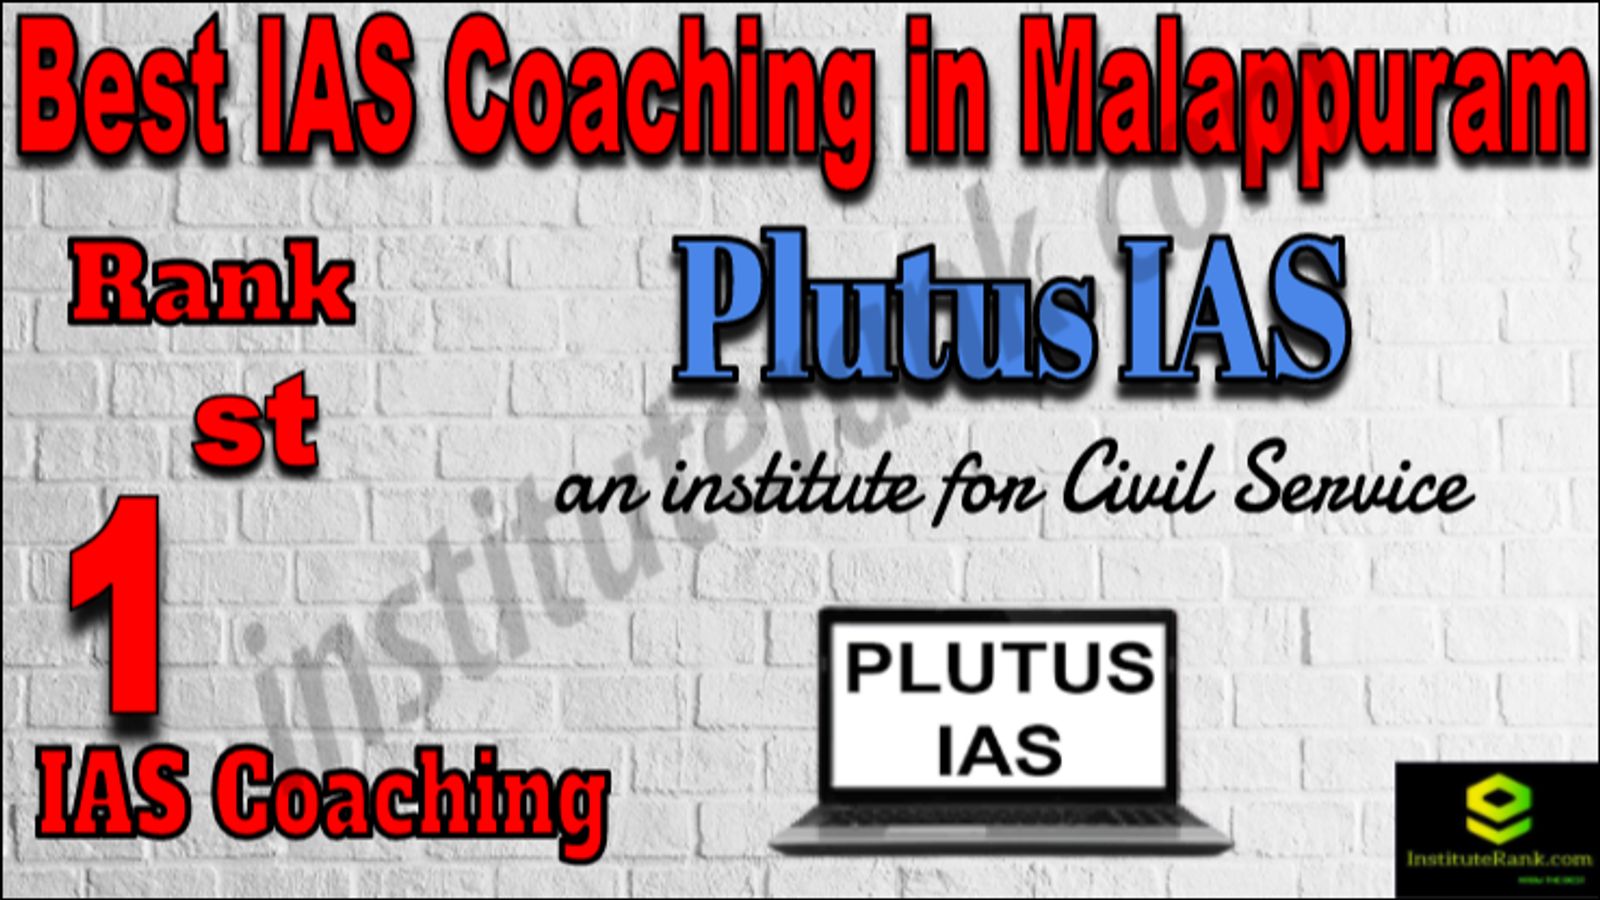 Rank 1 Best IAS Coaching in Malappuram